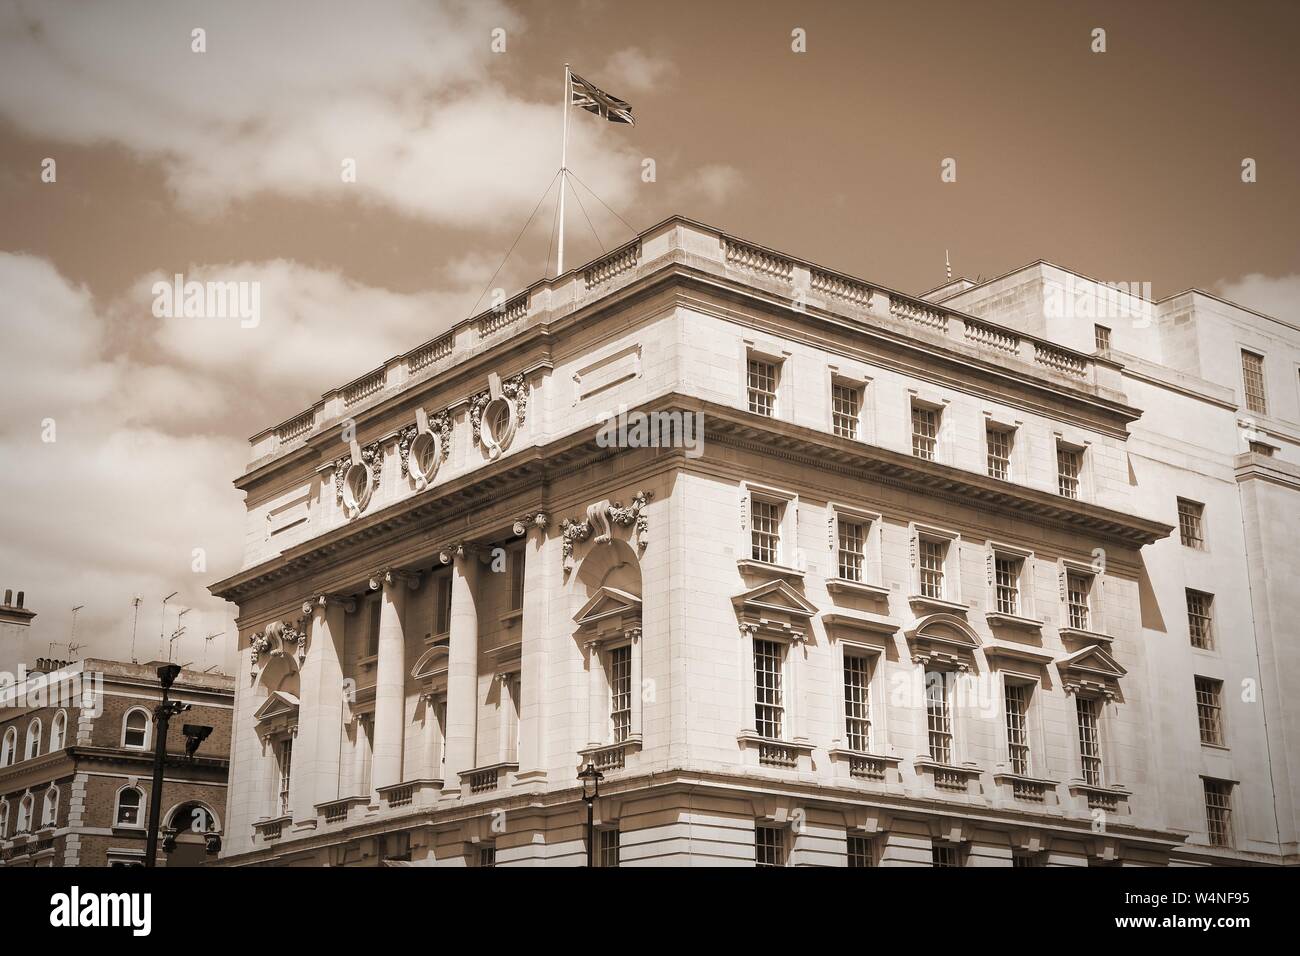 London, UK - governmental building at Whitehall. British flag. Sepia tone - filtered vintage photo style. Stock Photo